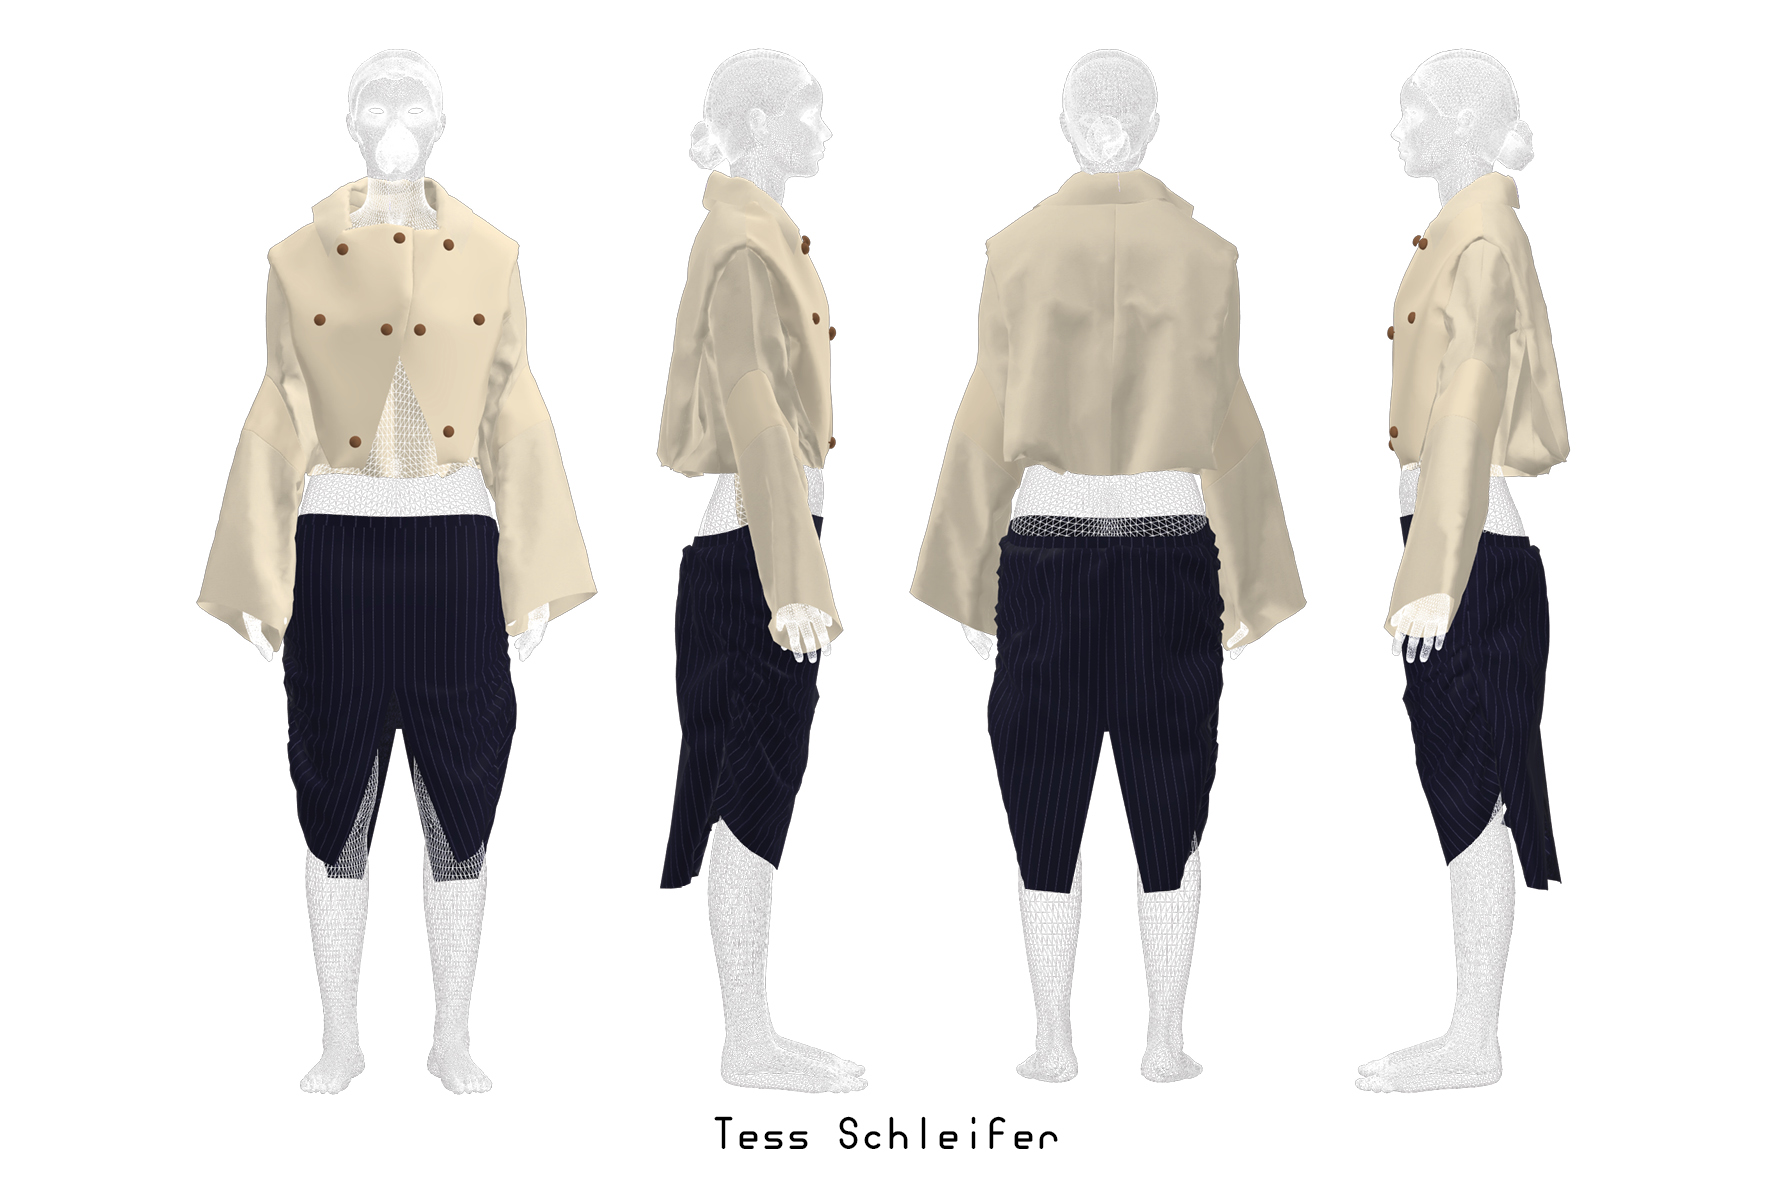 Design Tess Schleifer